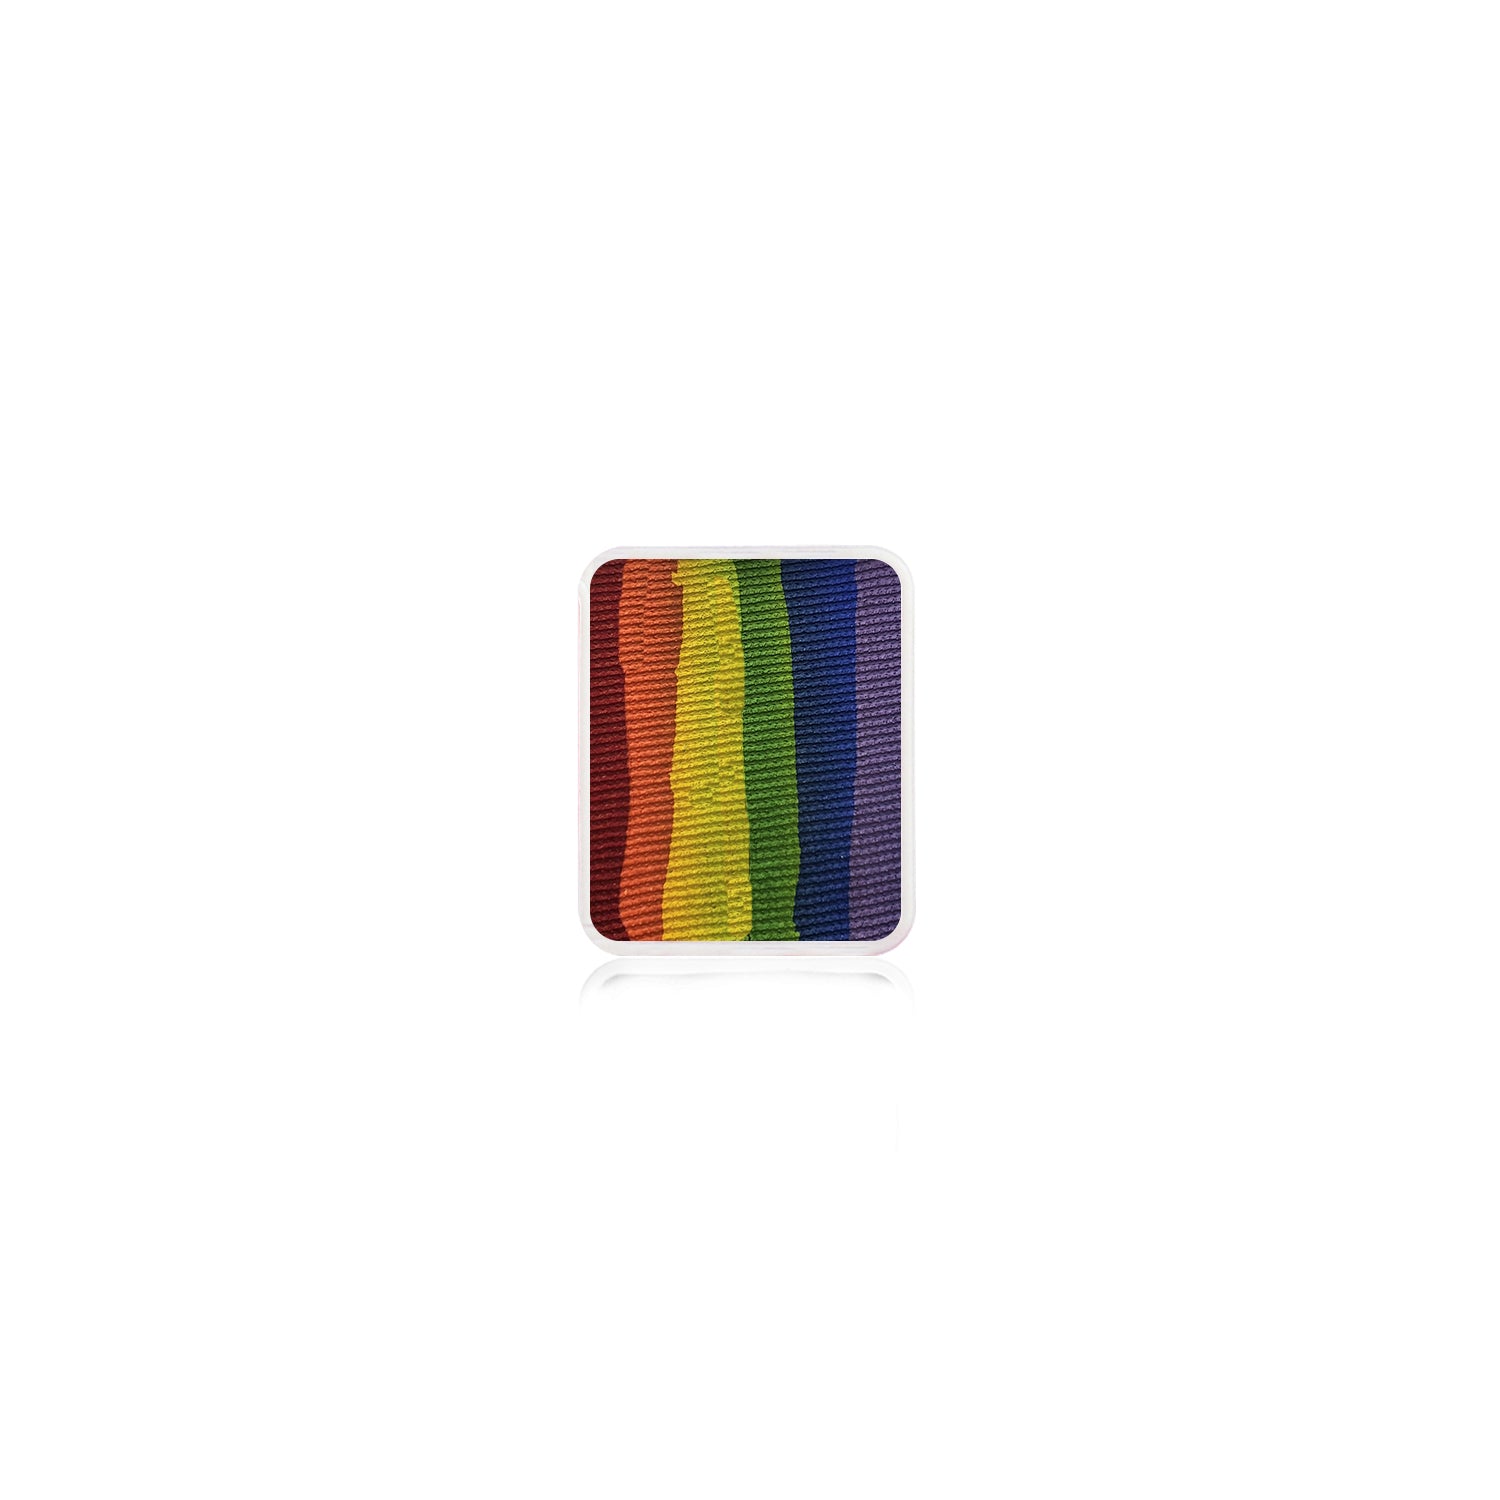 Kraze FX One Stroke Palette Refill - Esssential Rainbow (0.21 oz/6 gm)